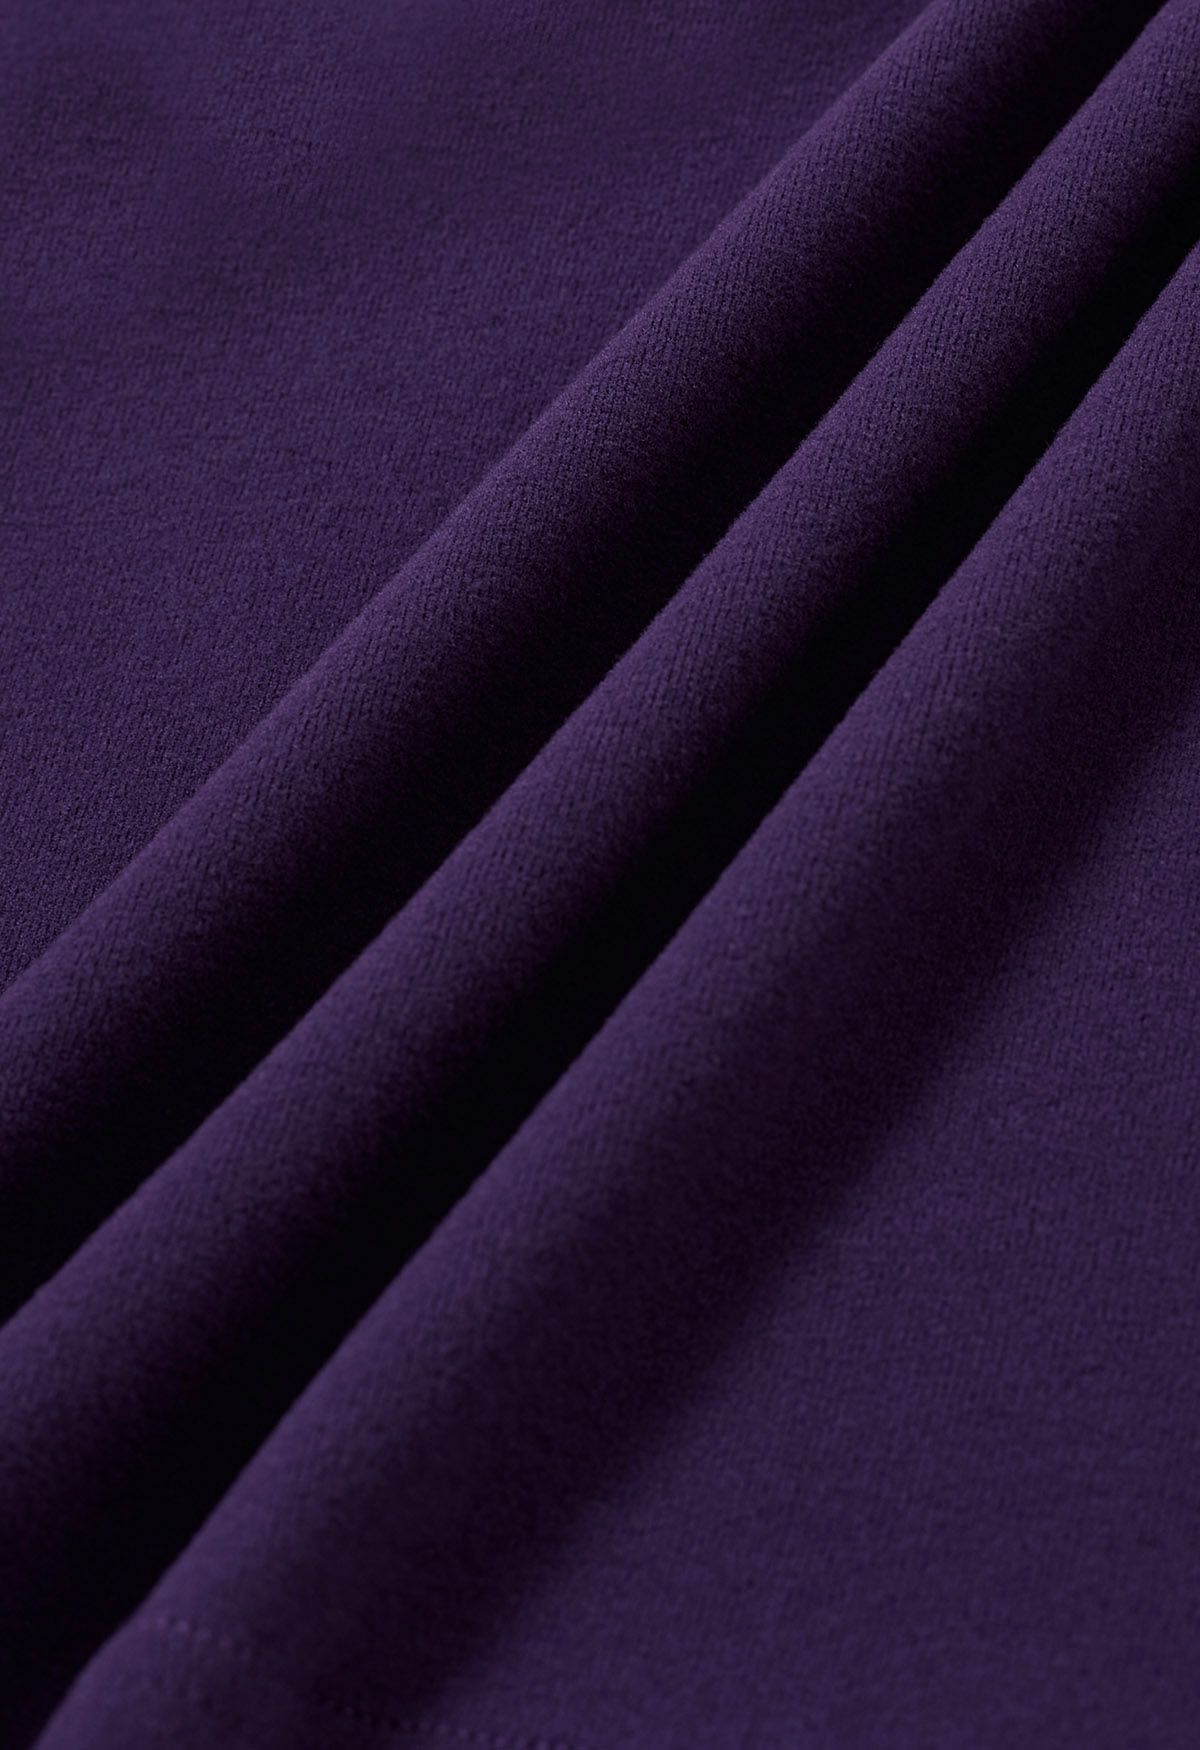 Solid Color Soft Wrap Top in Purple - Retro, Indie and Unique Fashion